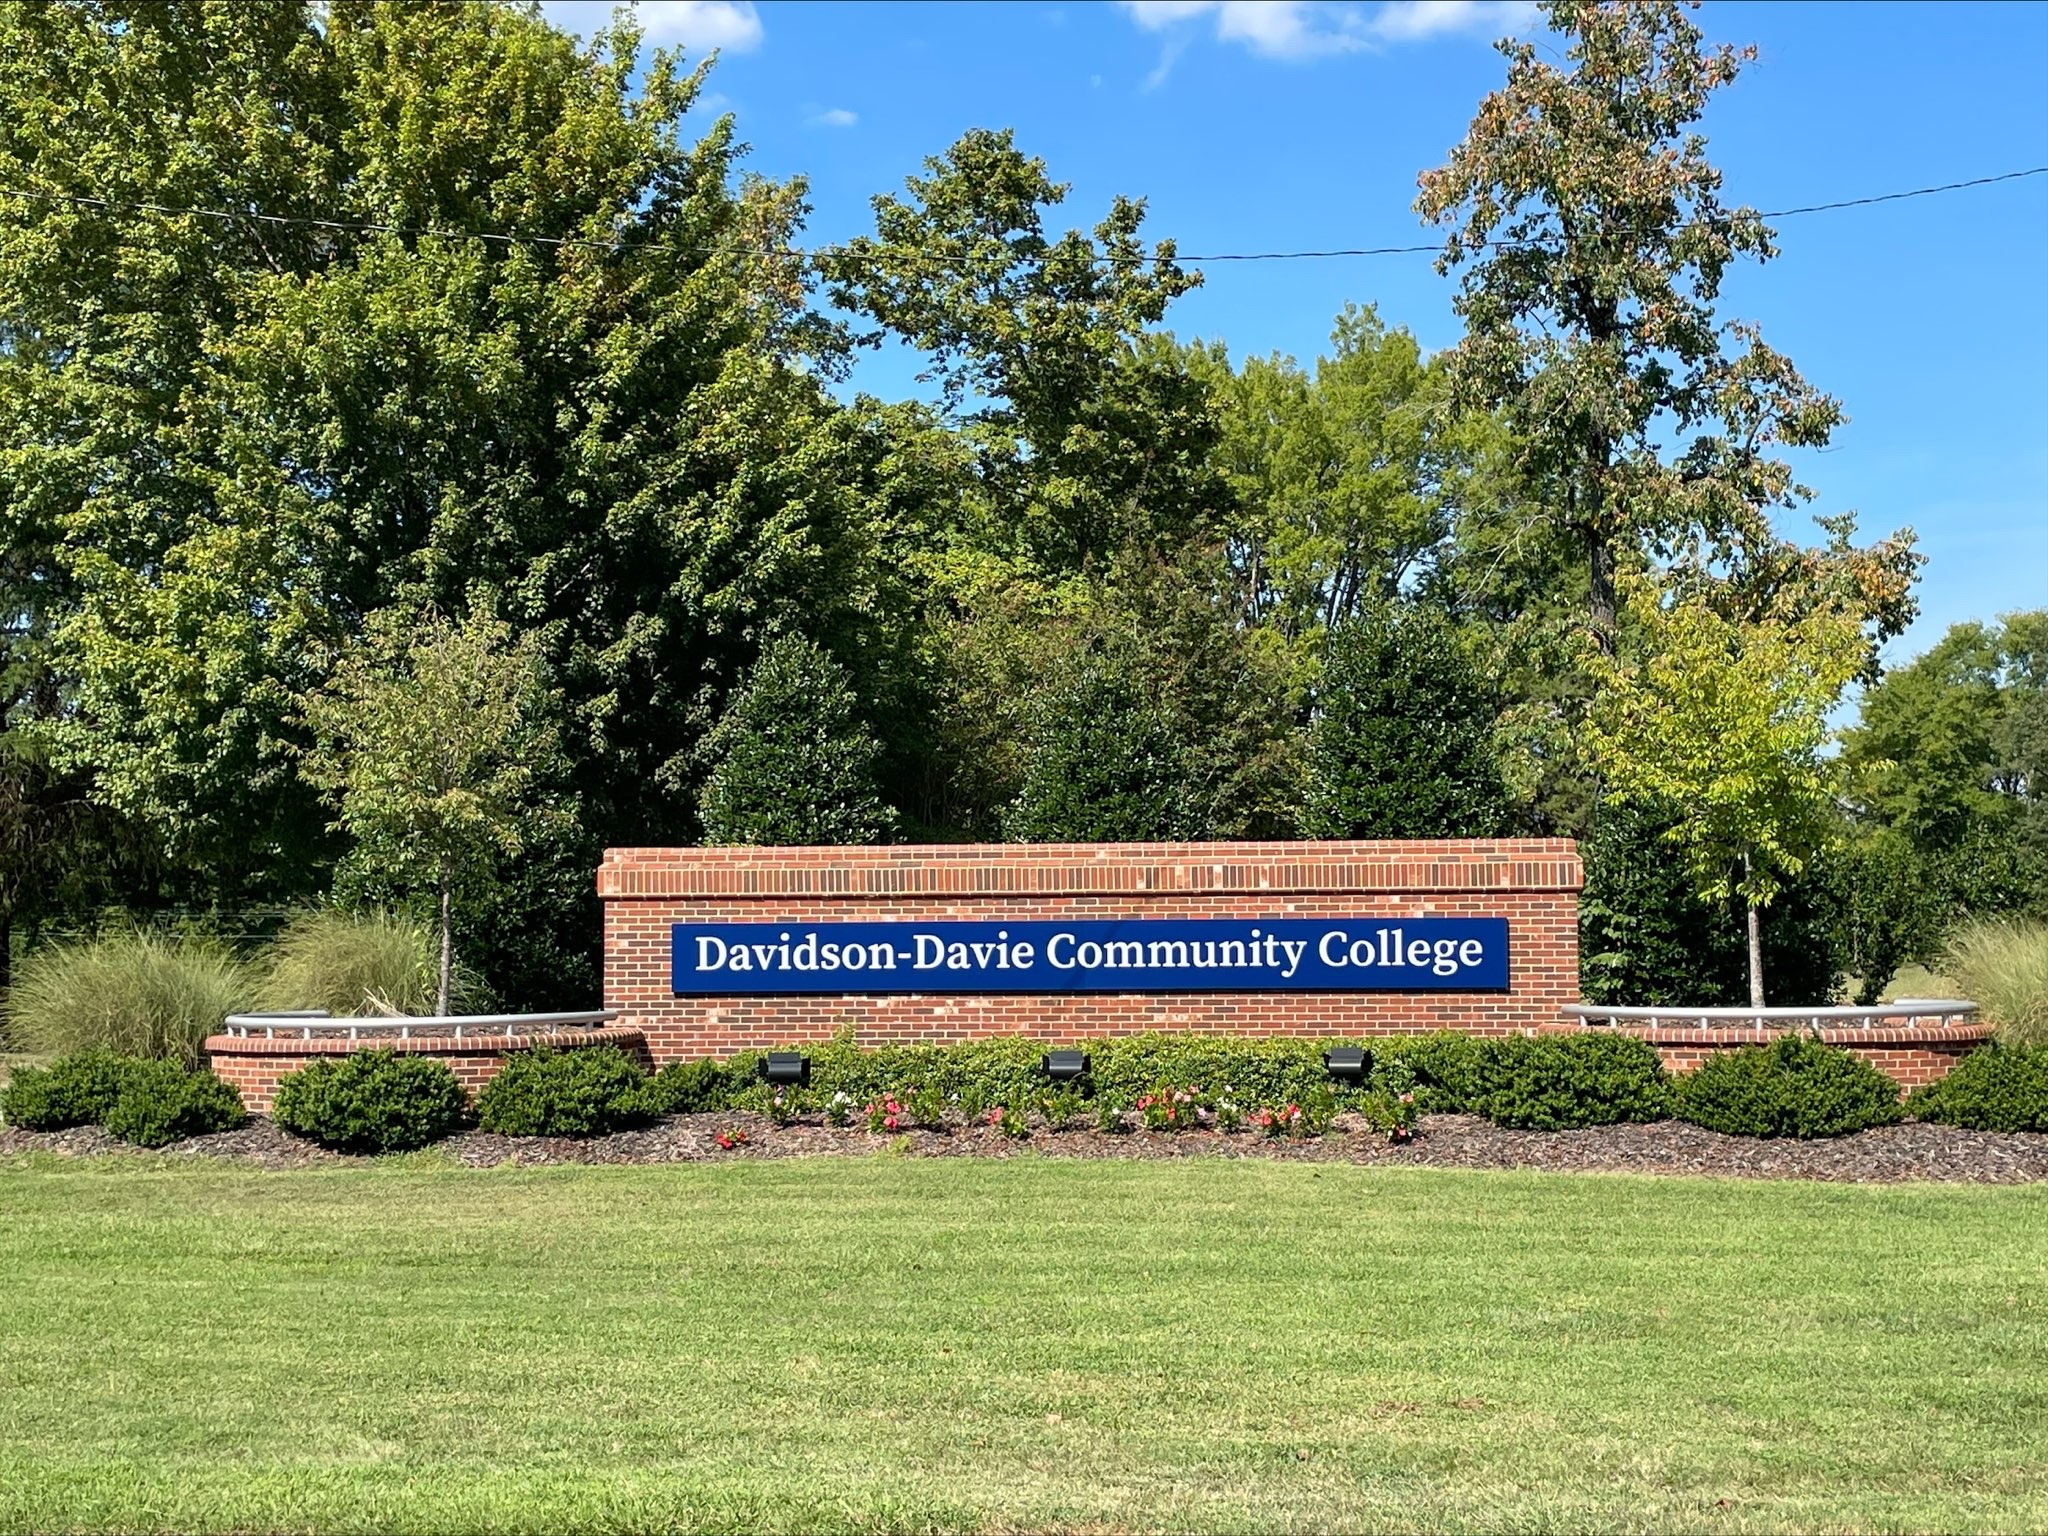 Davidson-Davie Community College Digital Signage